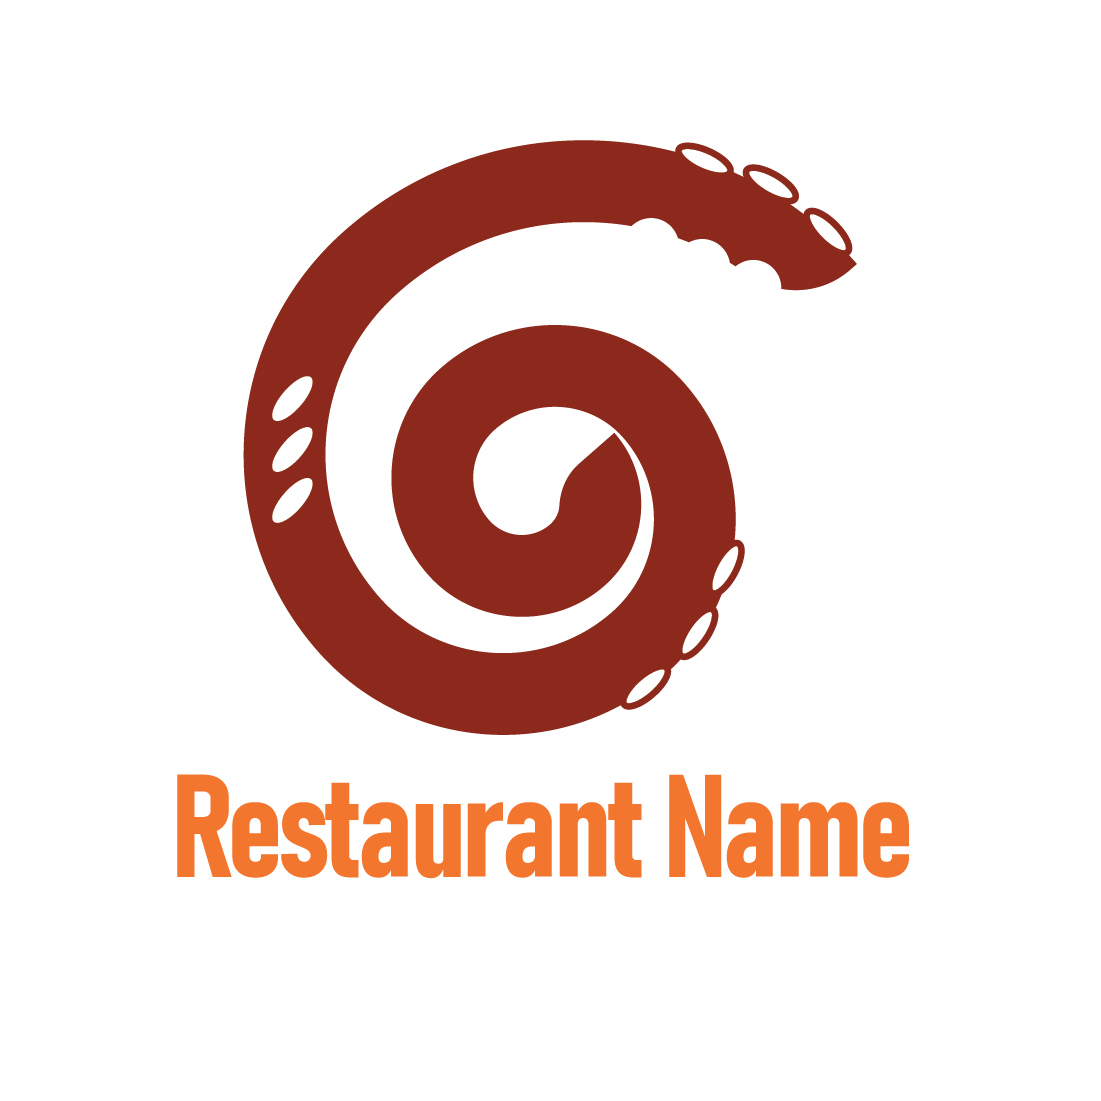 Restaurant logo cover image.